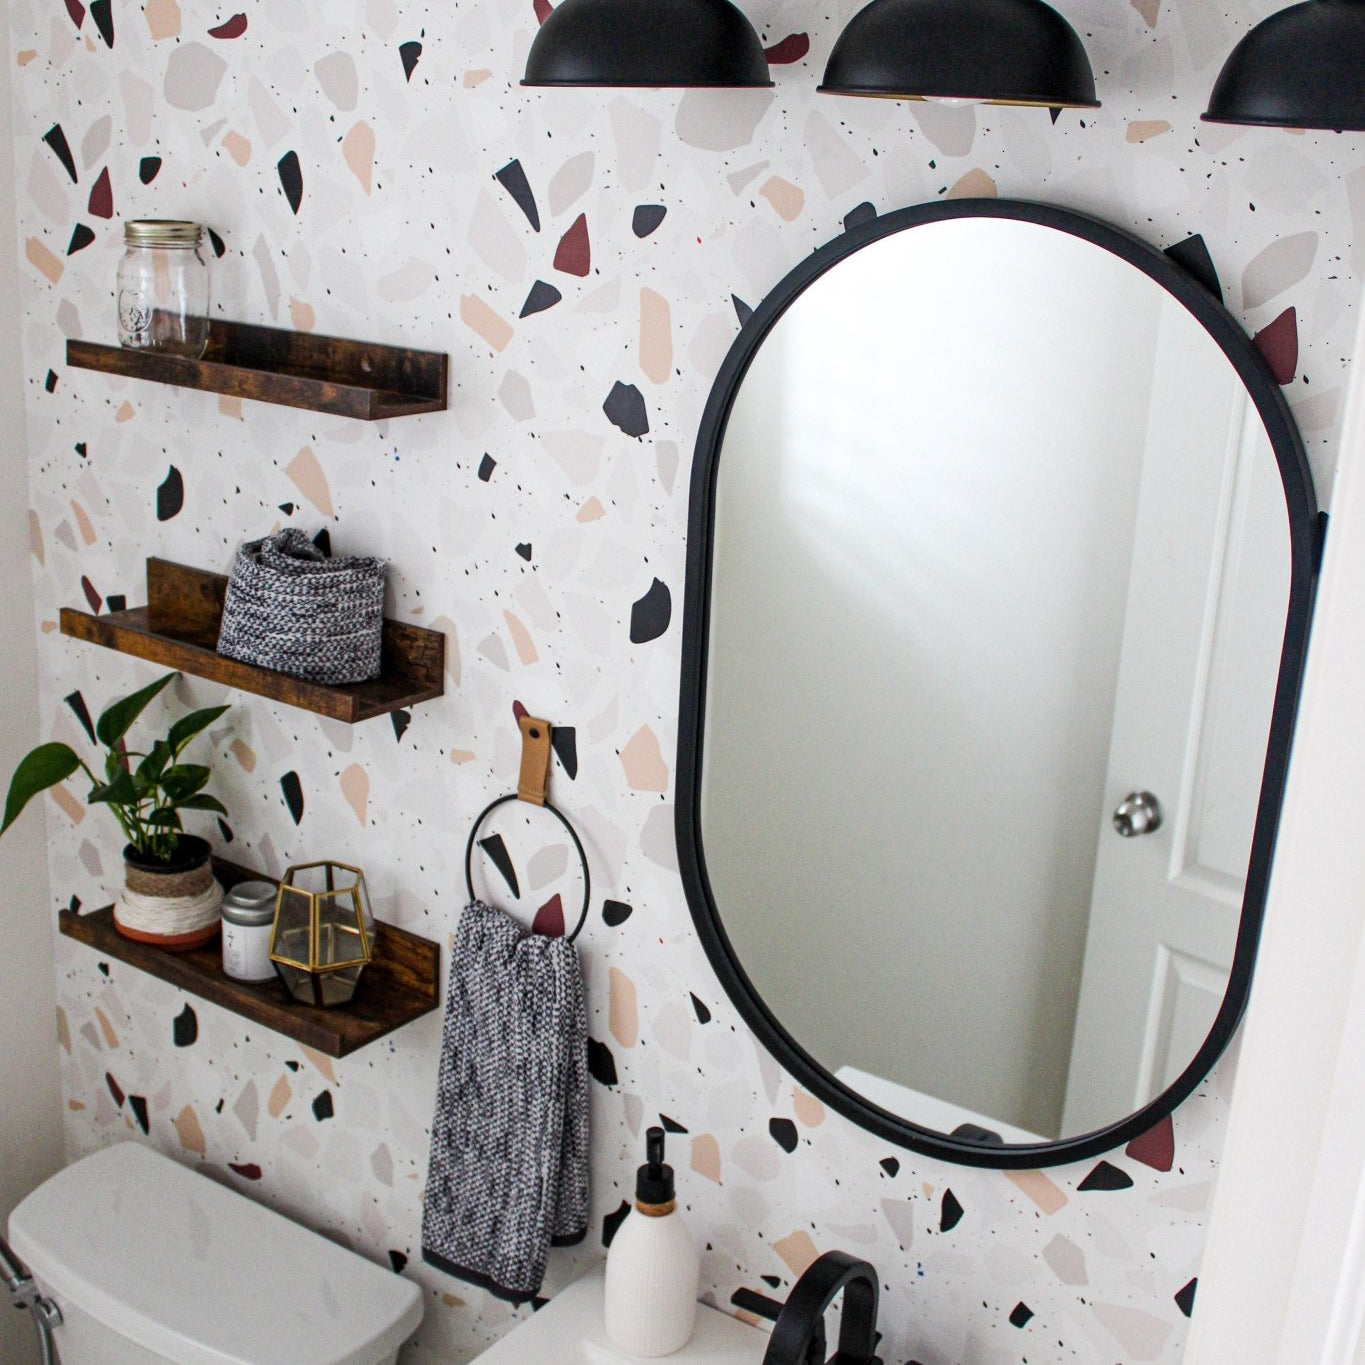 Terrazzo bathroom wallpaper with black accents